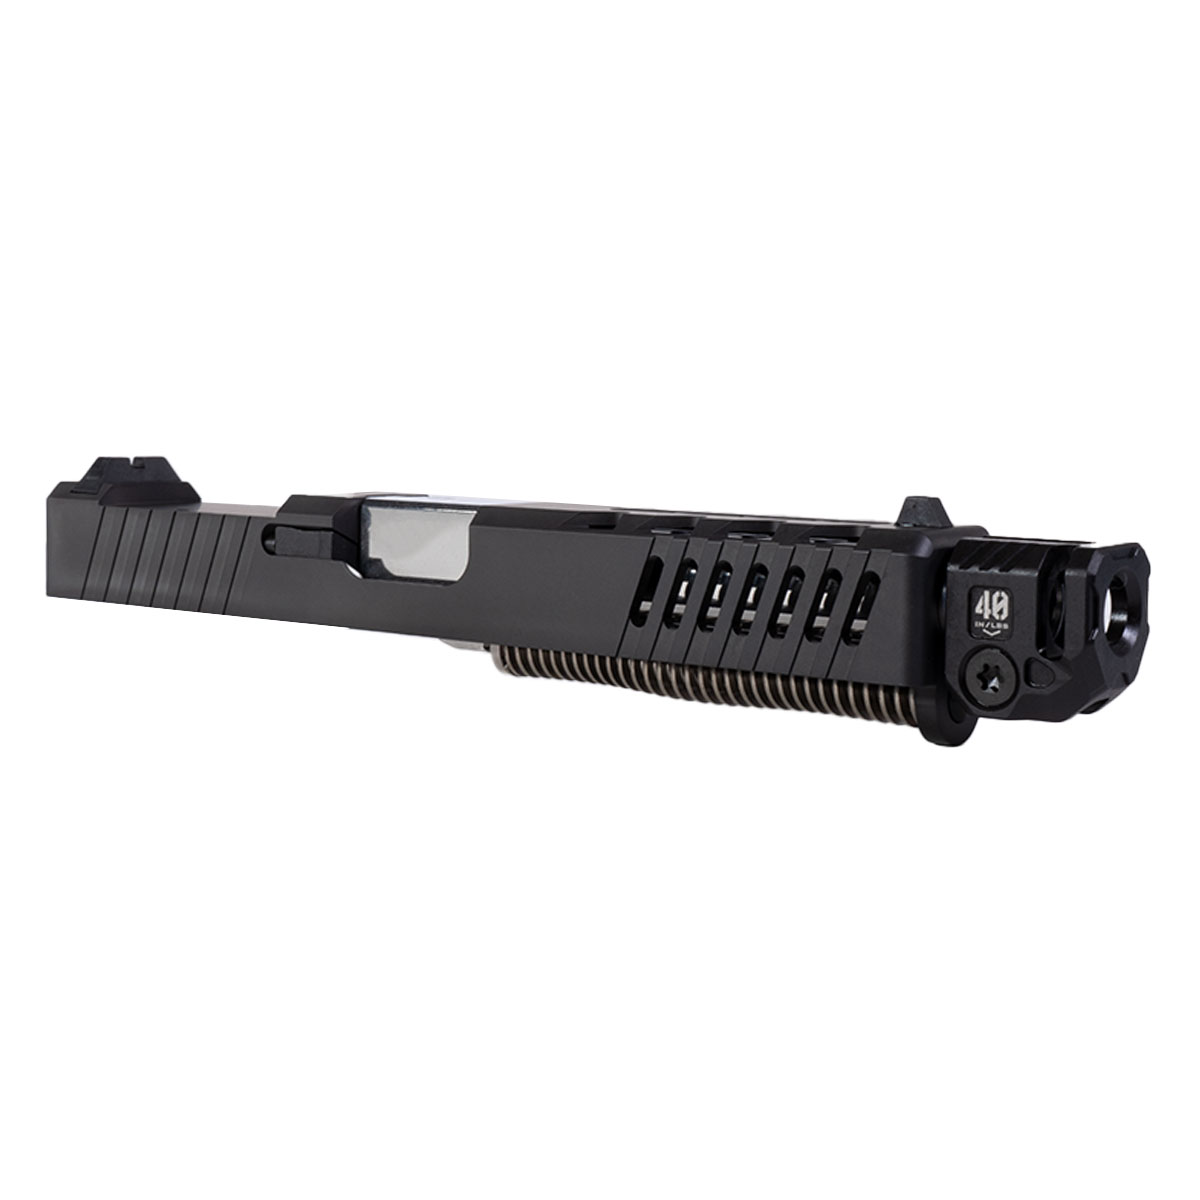 DTT 'Power Geyser' 9mm Complete Slide Kit - Glock 17 Gen 1-3 Compatible